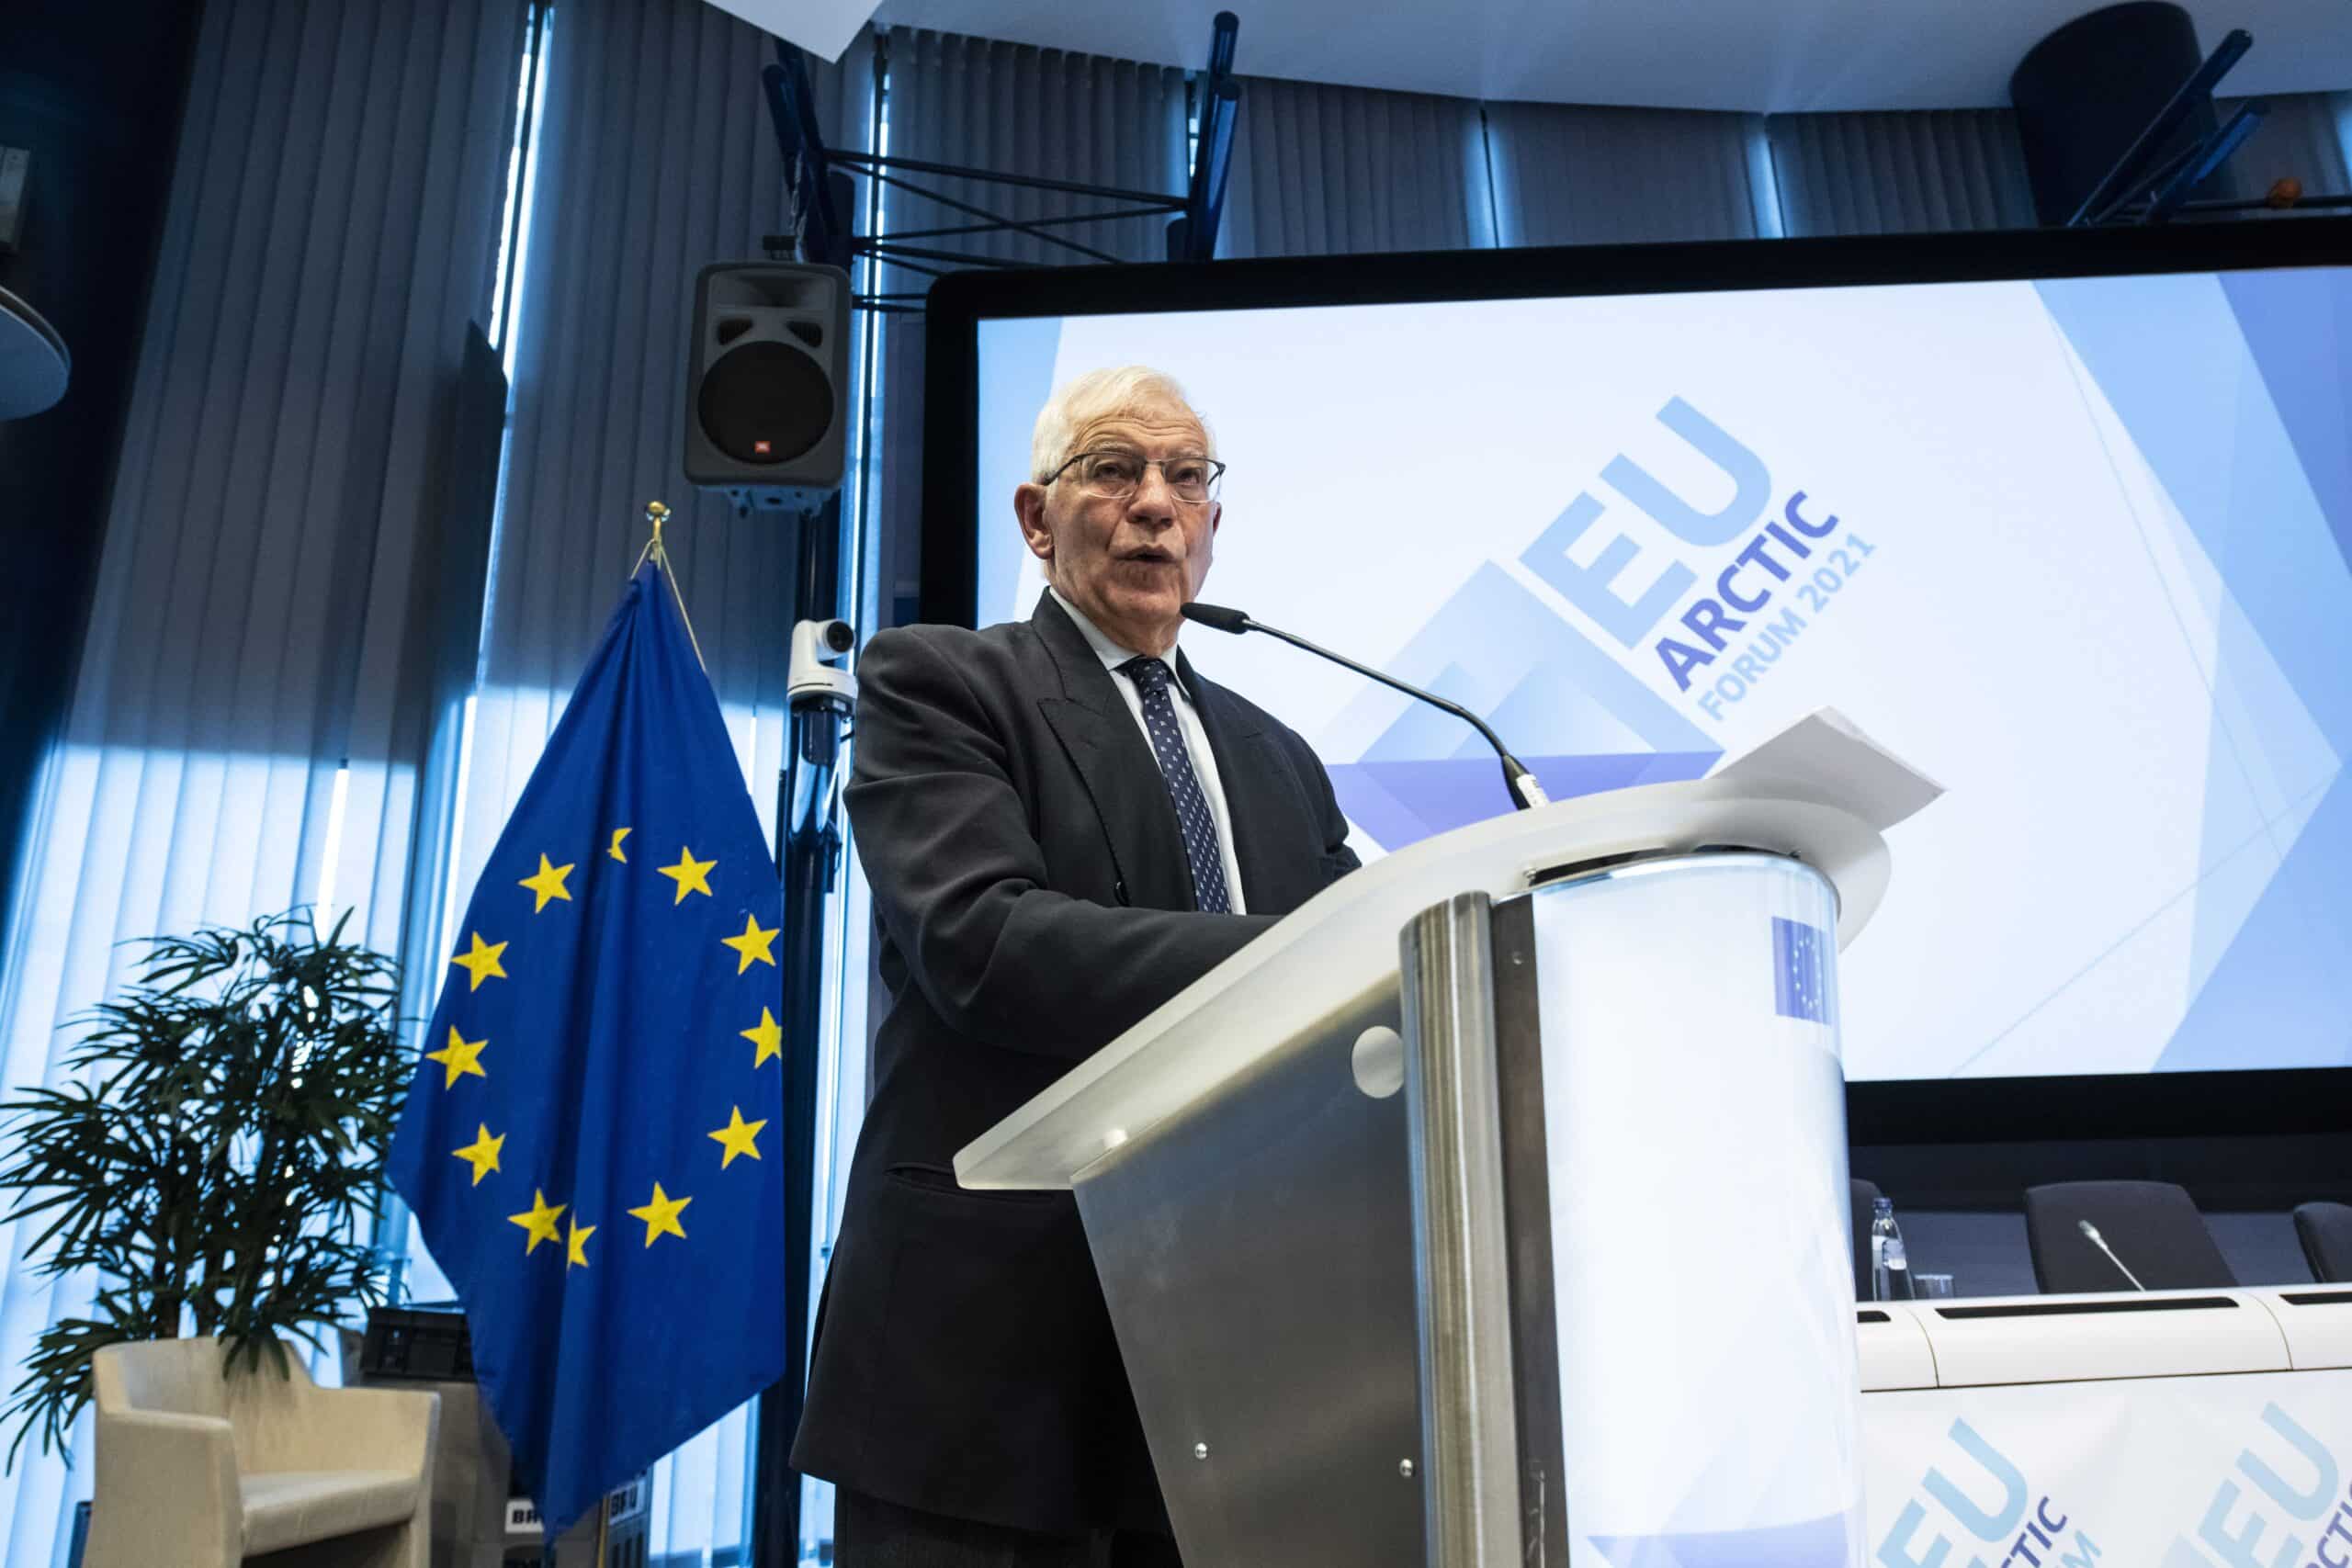 Josep Borrell Fontelles at the podium at the EU Arctic Forum 2021